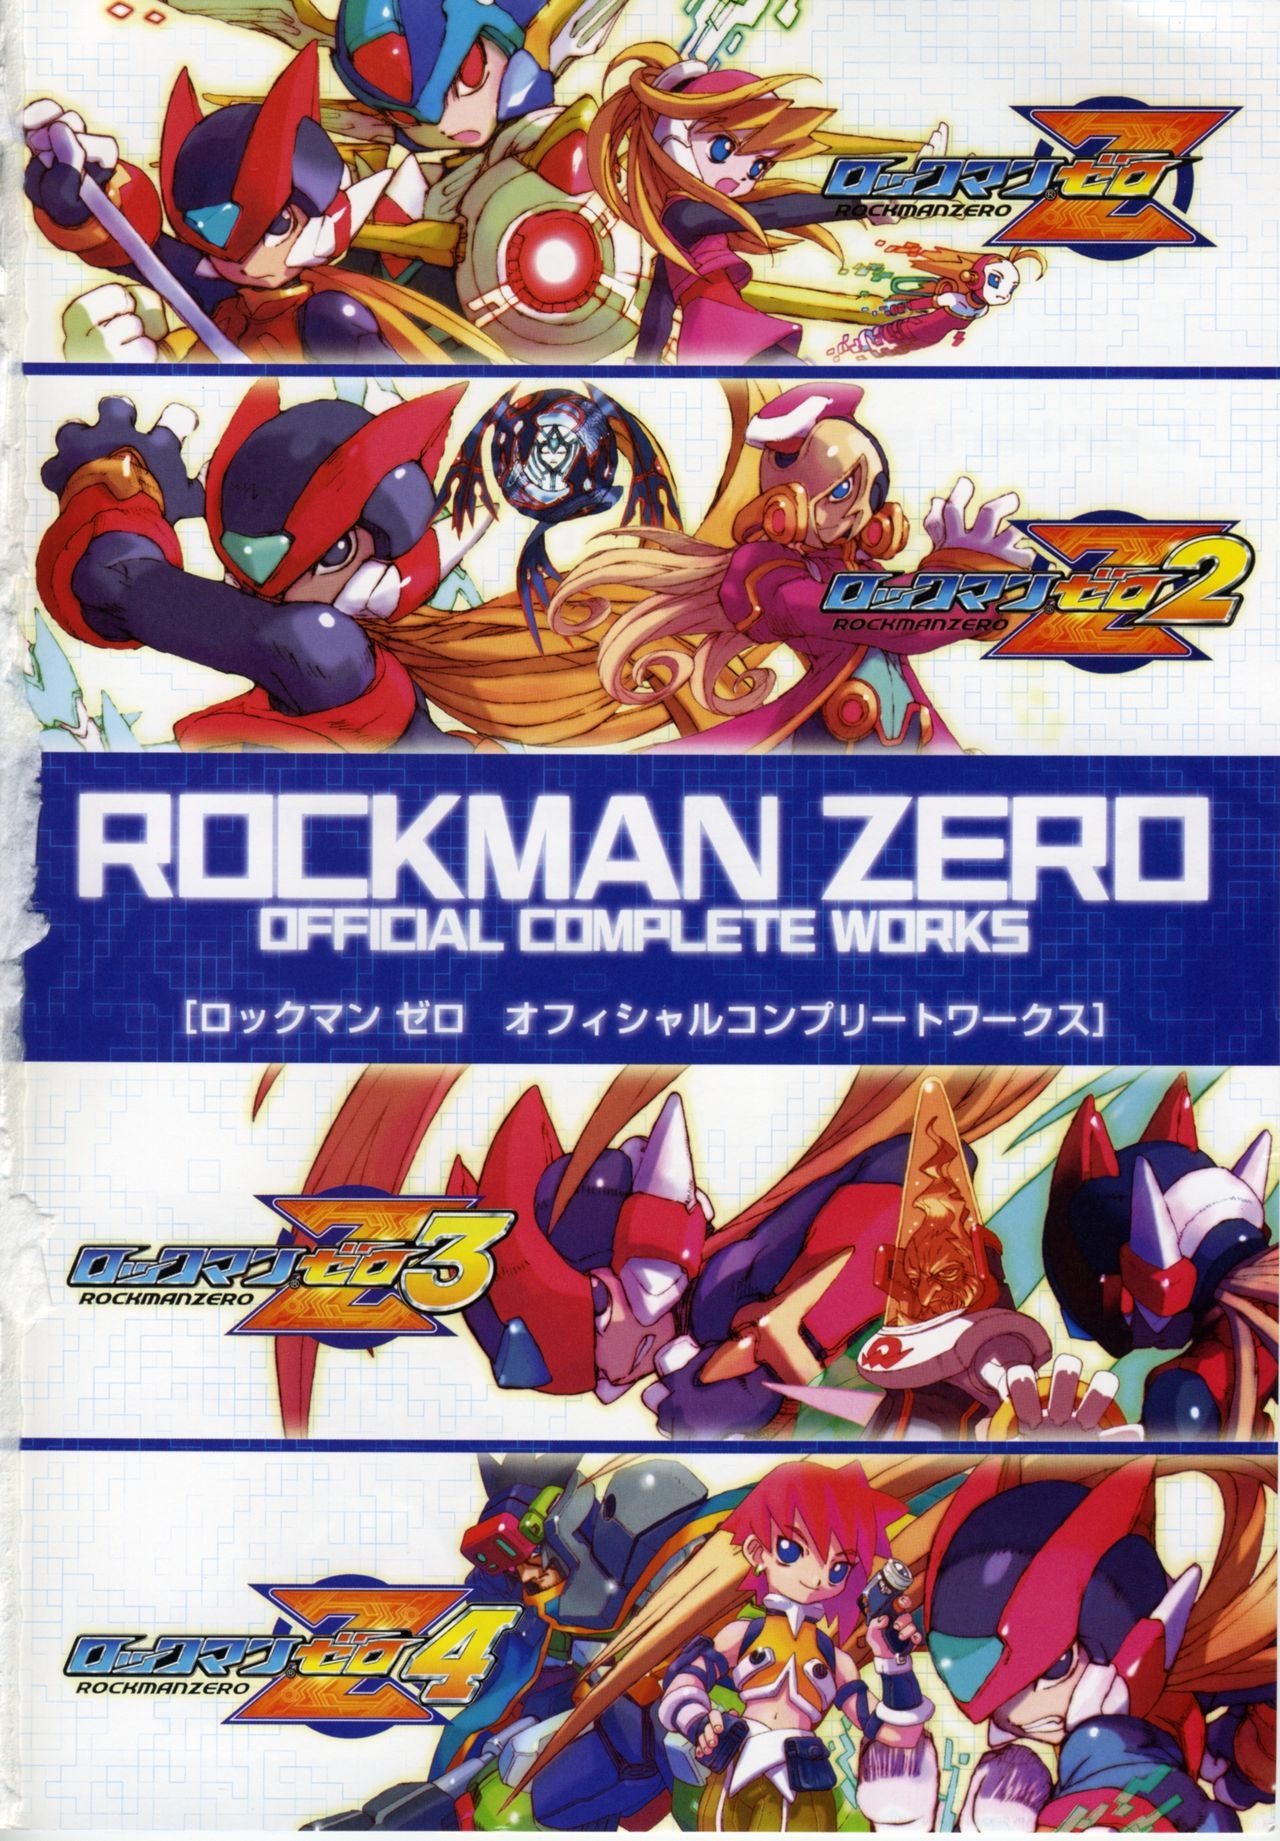 Rockman Zero Official Complete Works 4